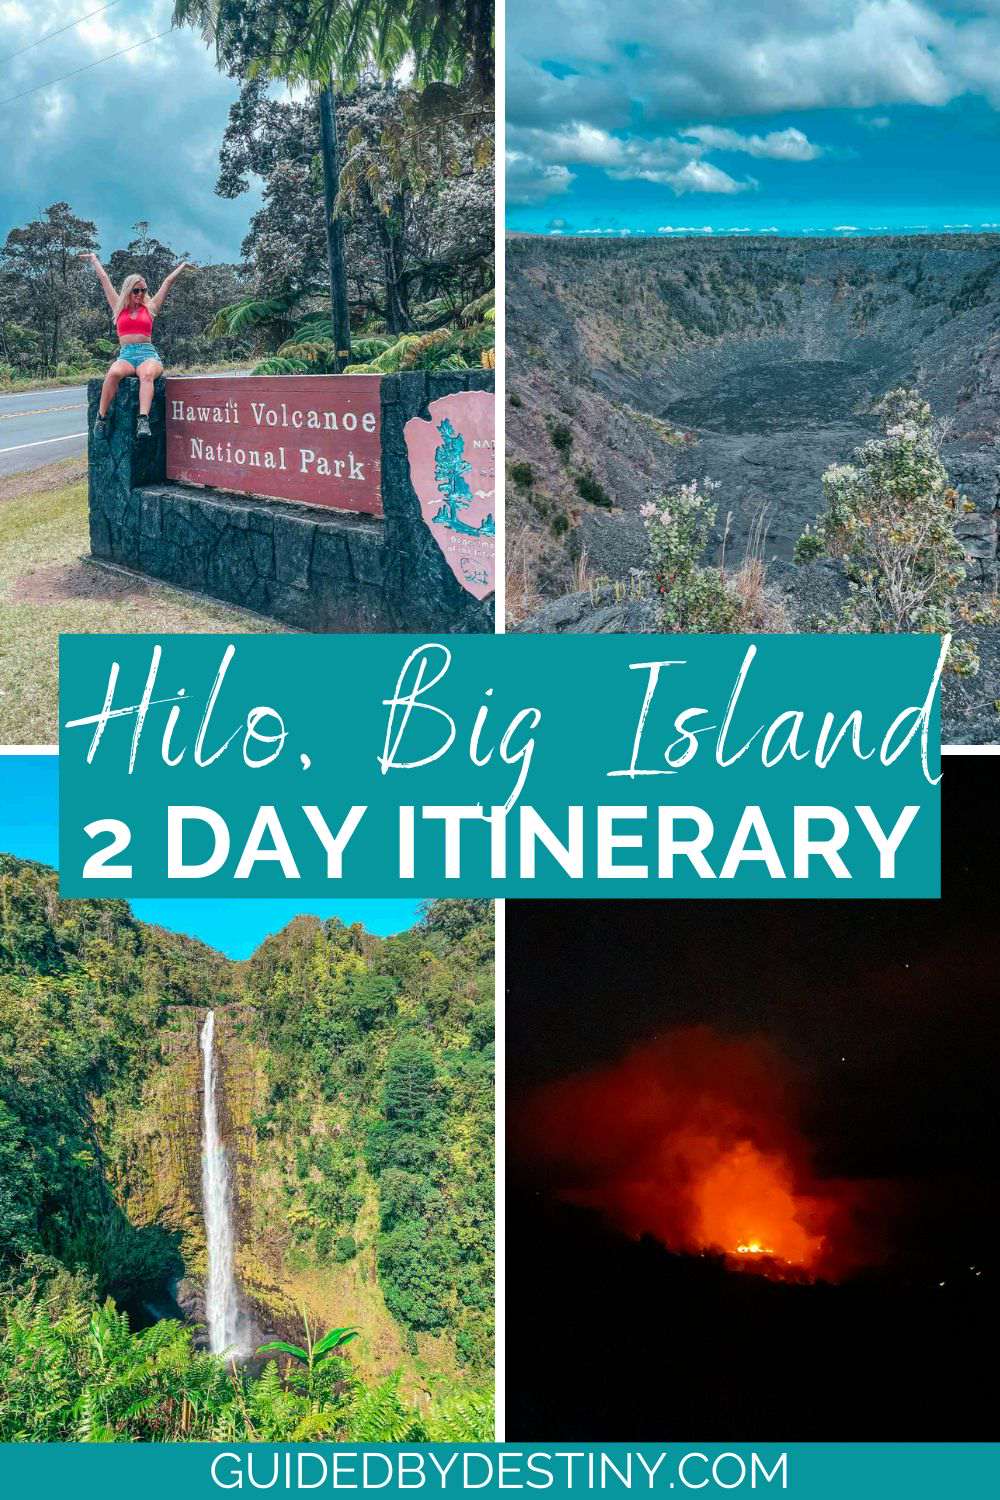 Hilo Big Island 2 day itinerary